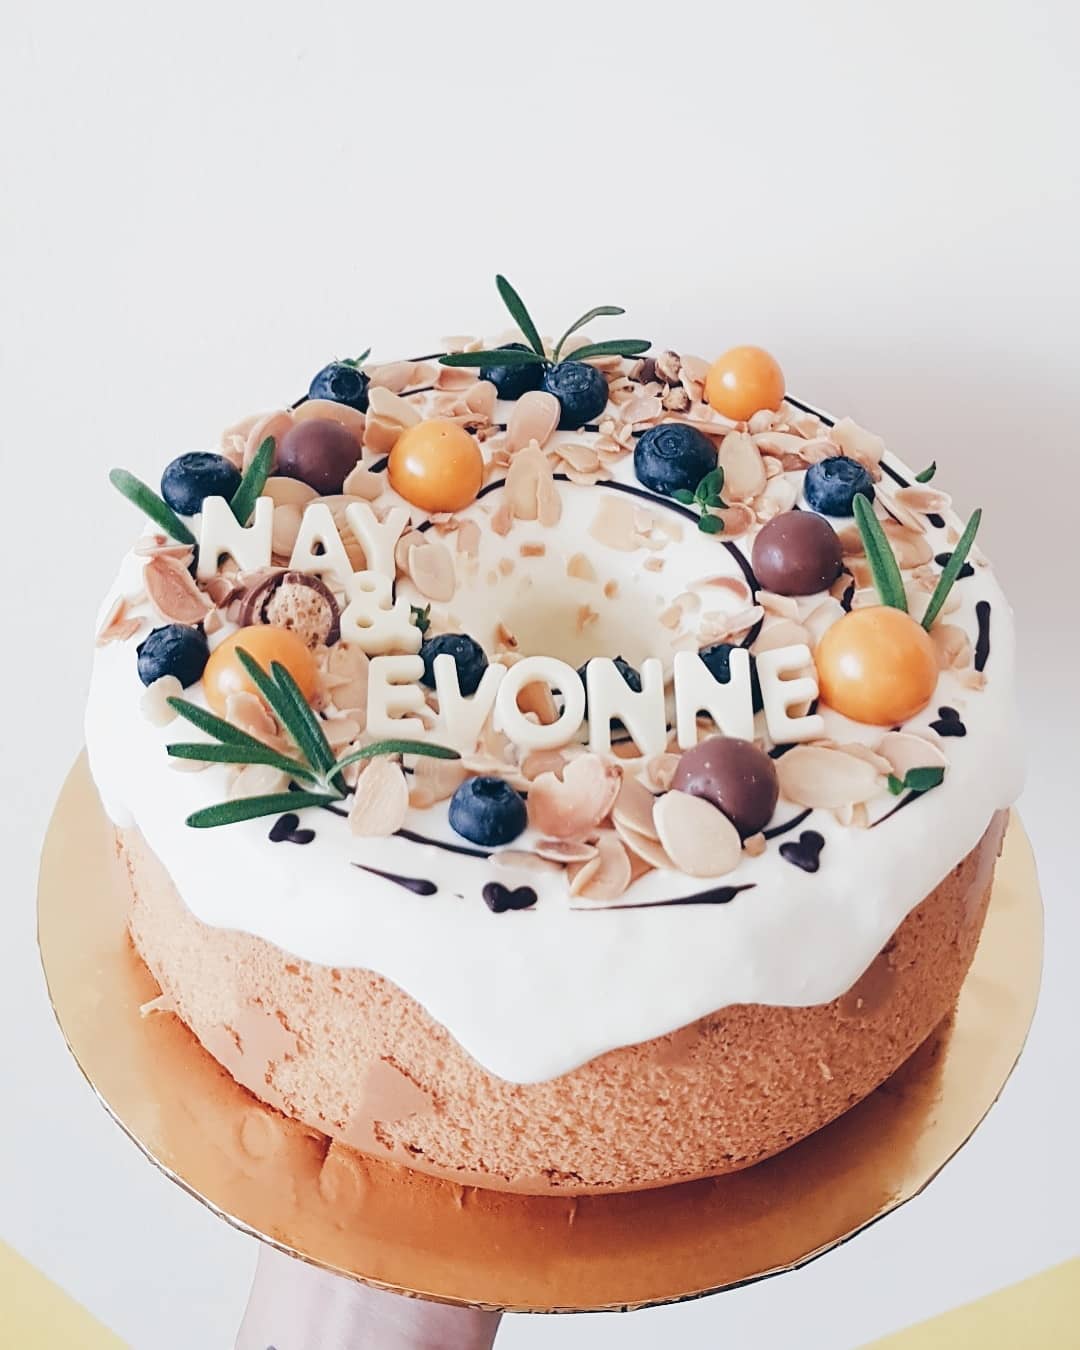 Nay Evonne fruit cake